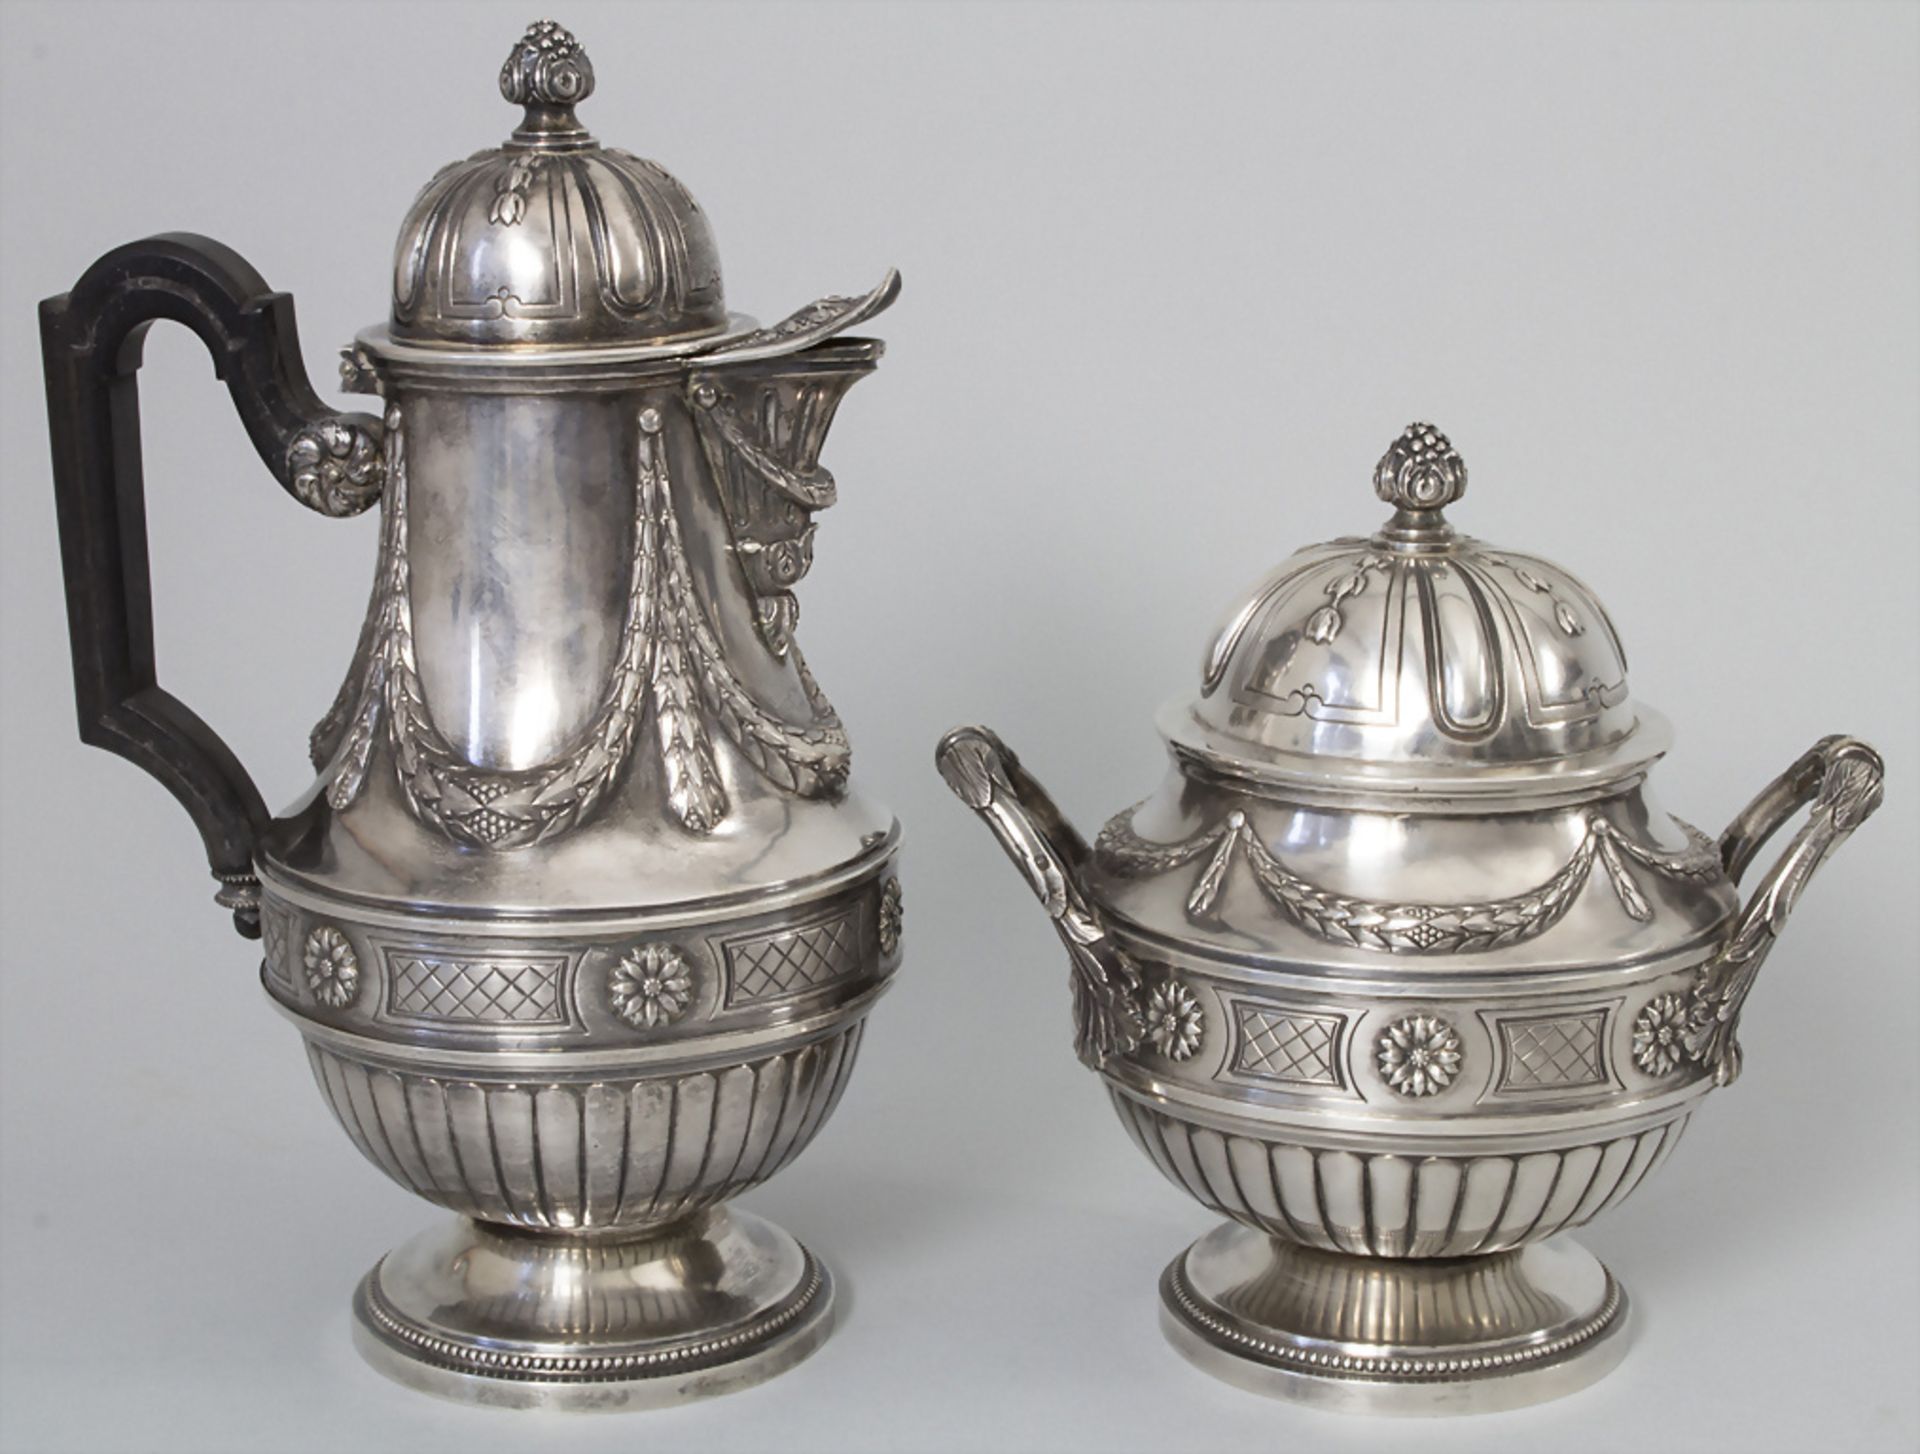 Kaffeekanne und Zuckerdose / A silver coffee pot and sugar bowl, Raoul Mauger, Paris 1897-1904 - Image 3 of 12